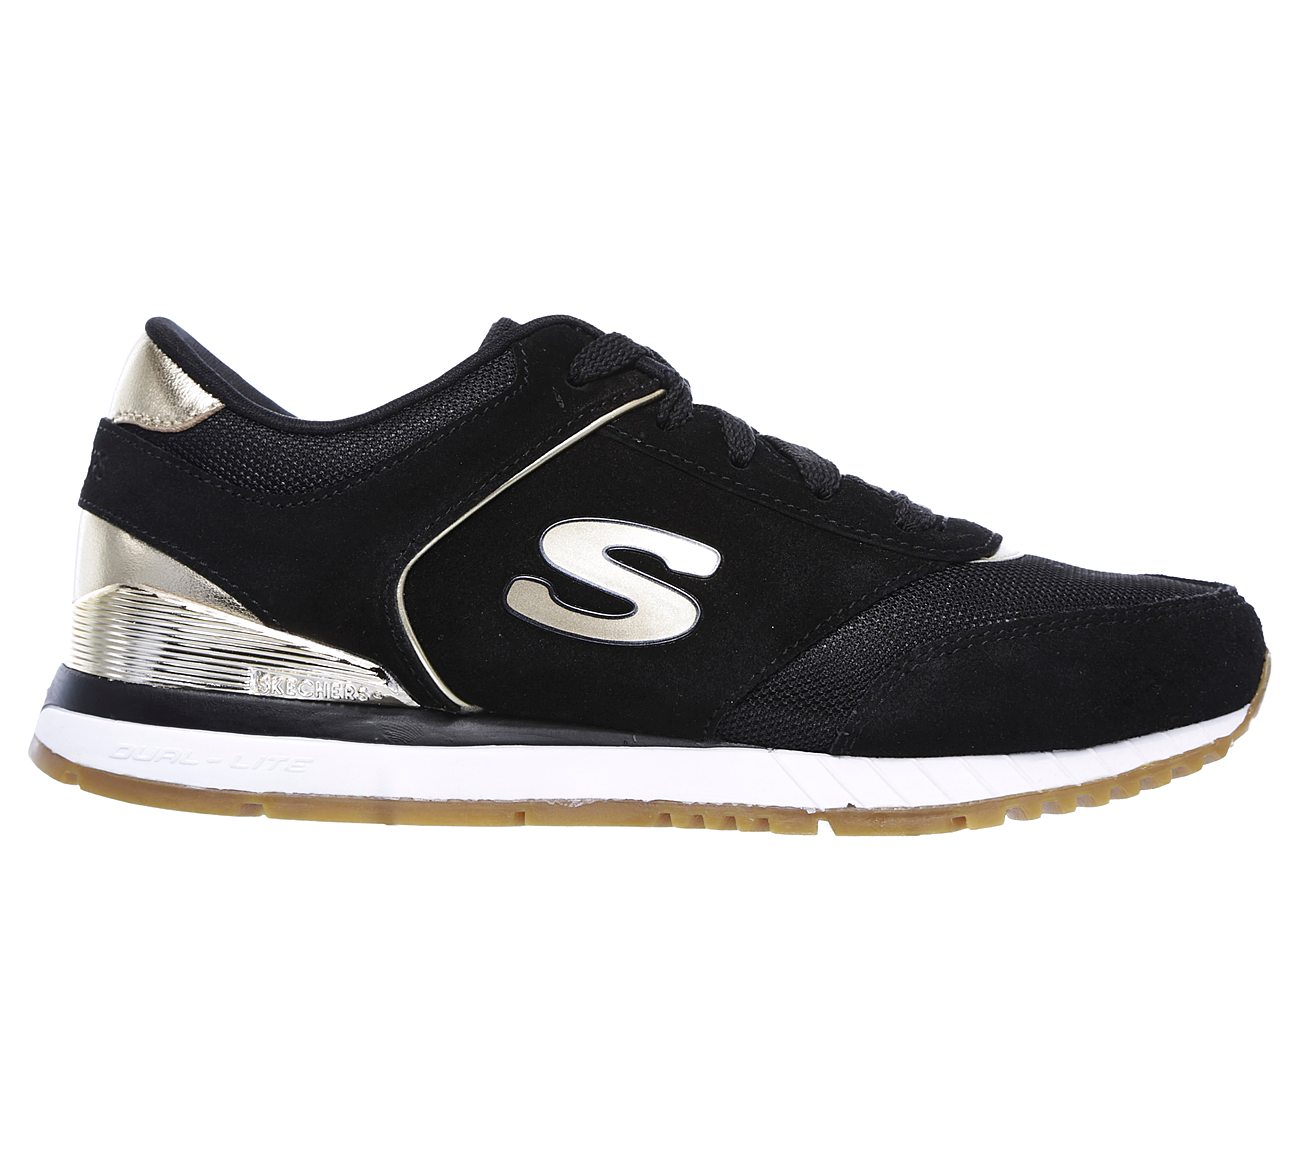 Buy SKECHERS Sunlite - Revival Originals Shoes